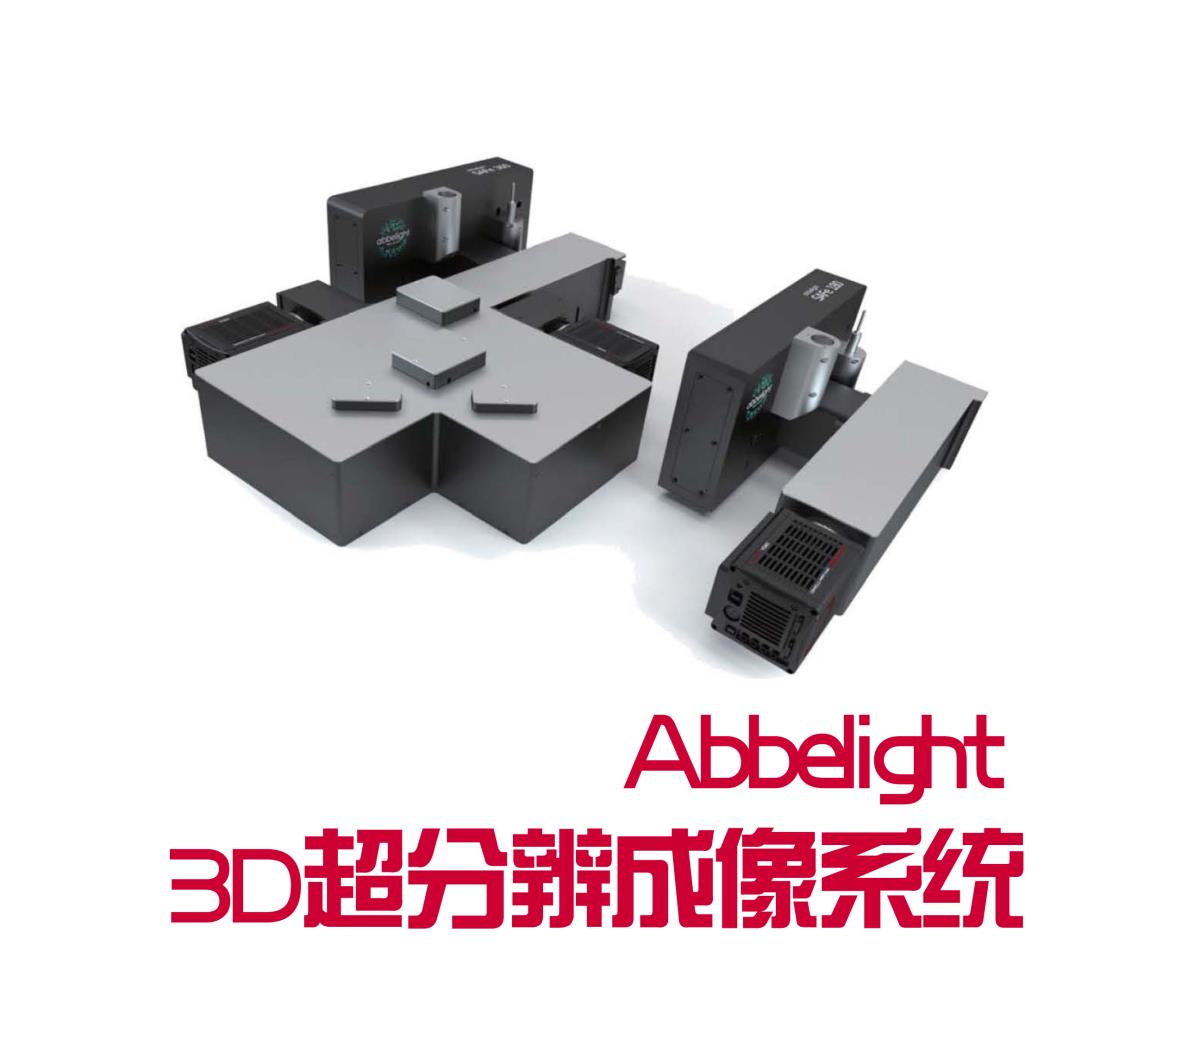 Abbelight 3D超分辨成像系统